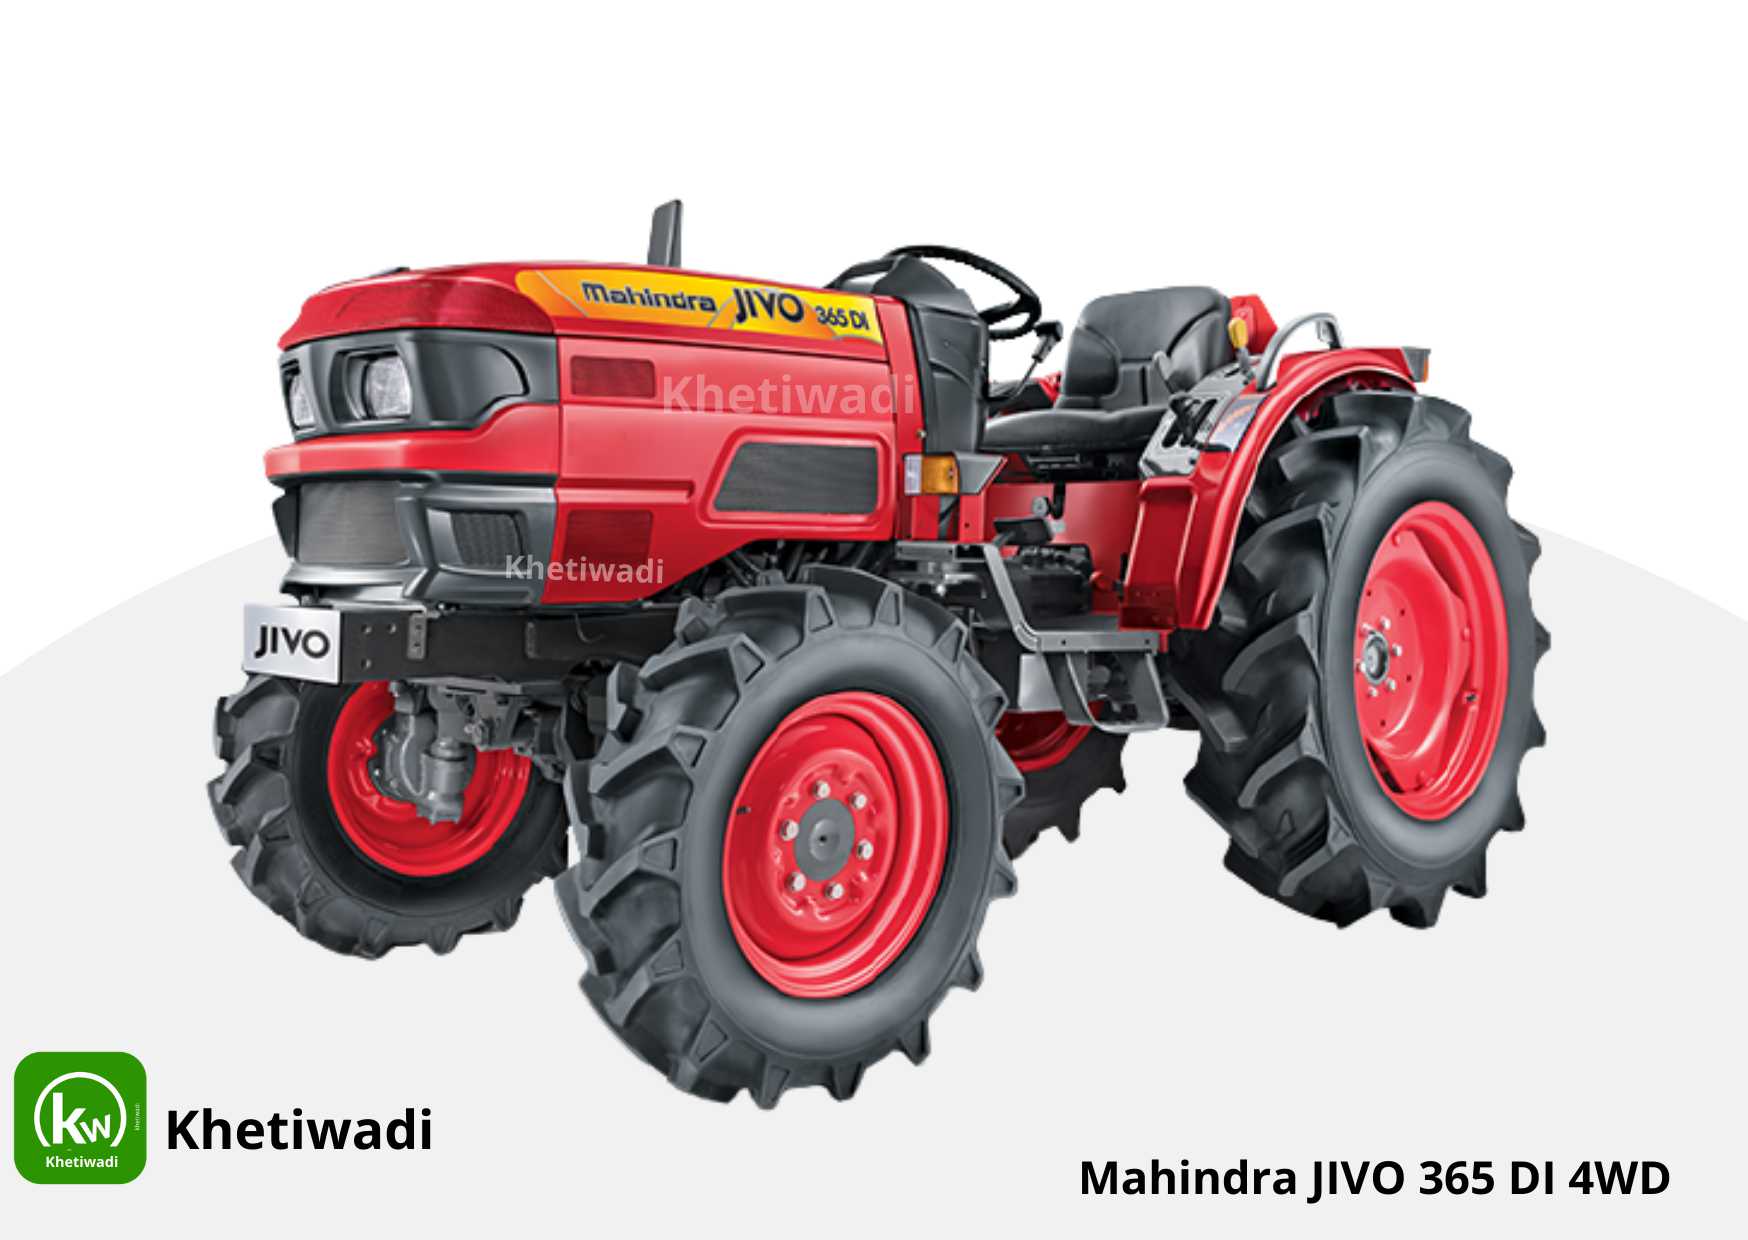 Mahindra JIVO 365 DI 4WD image